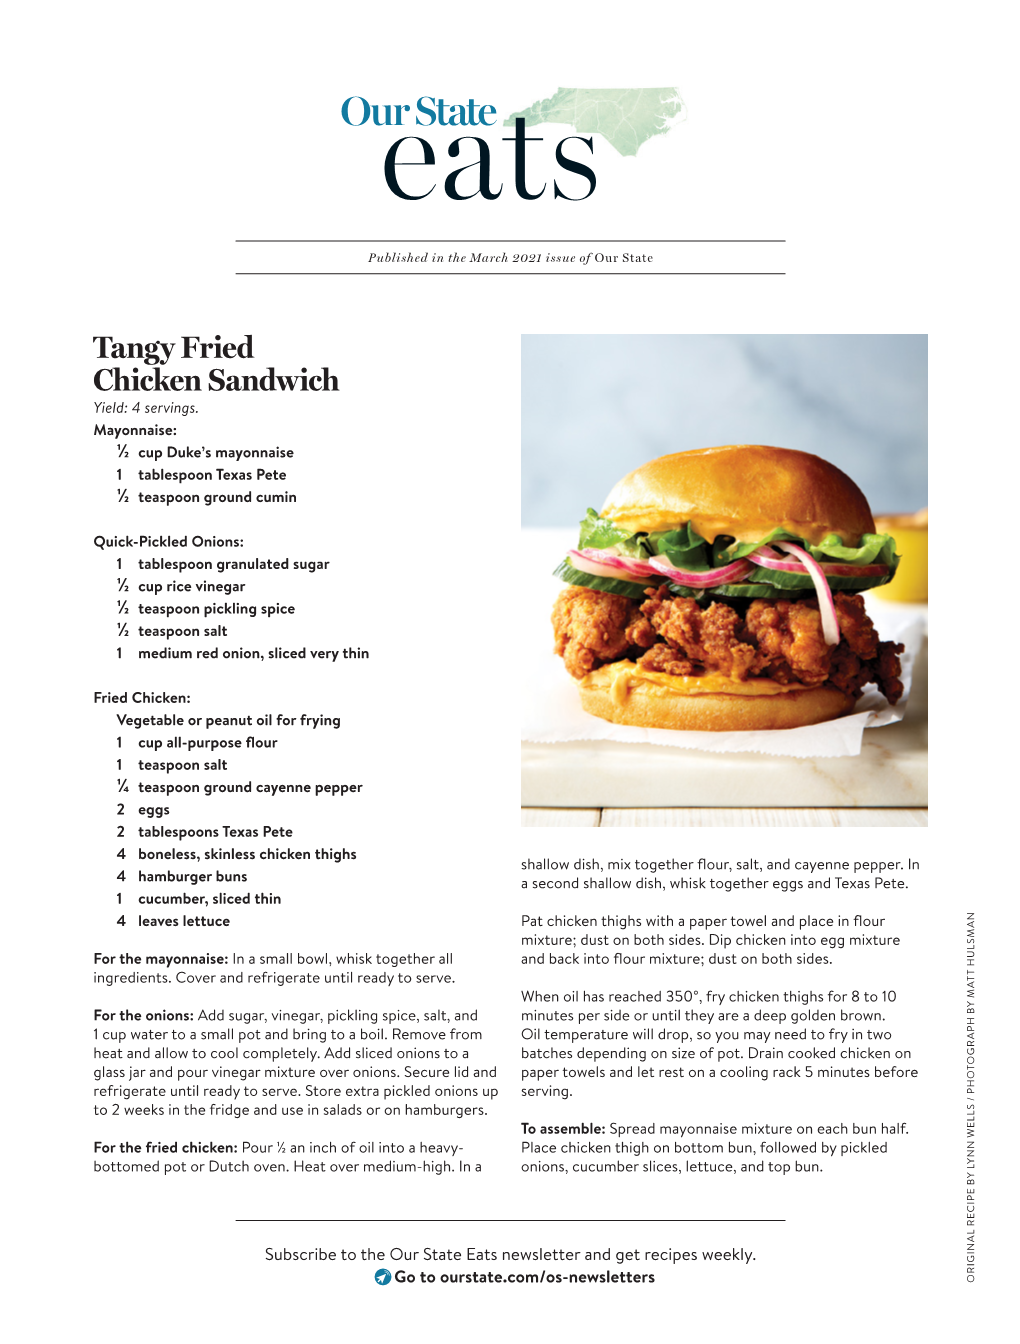 Tangy Fried Chicken Sandwich Yield: 4 Servings